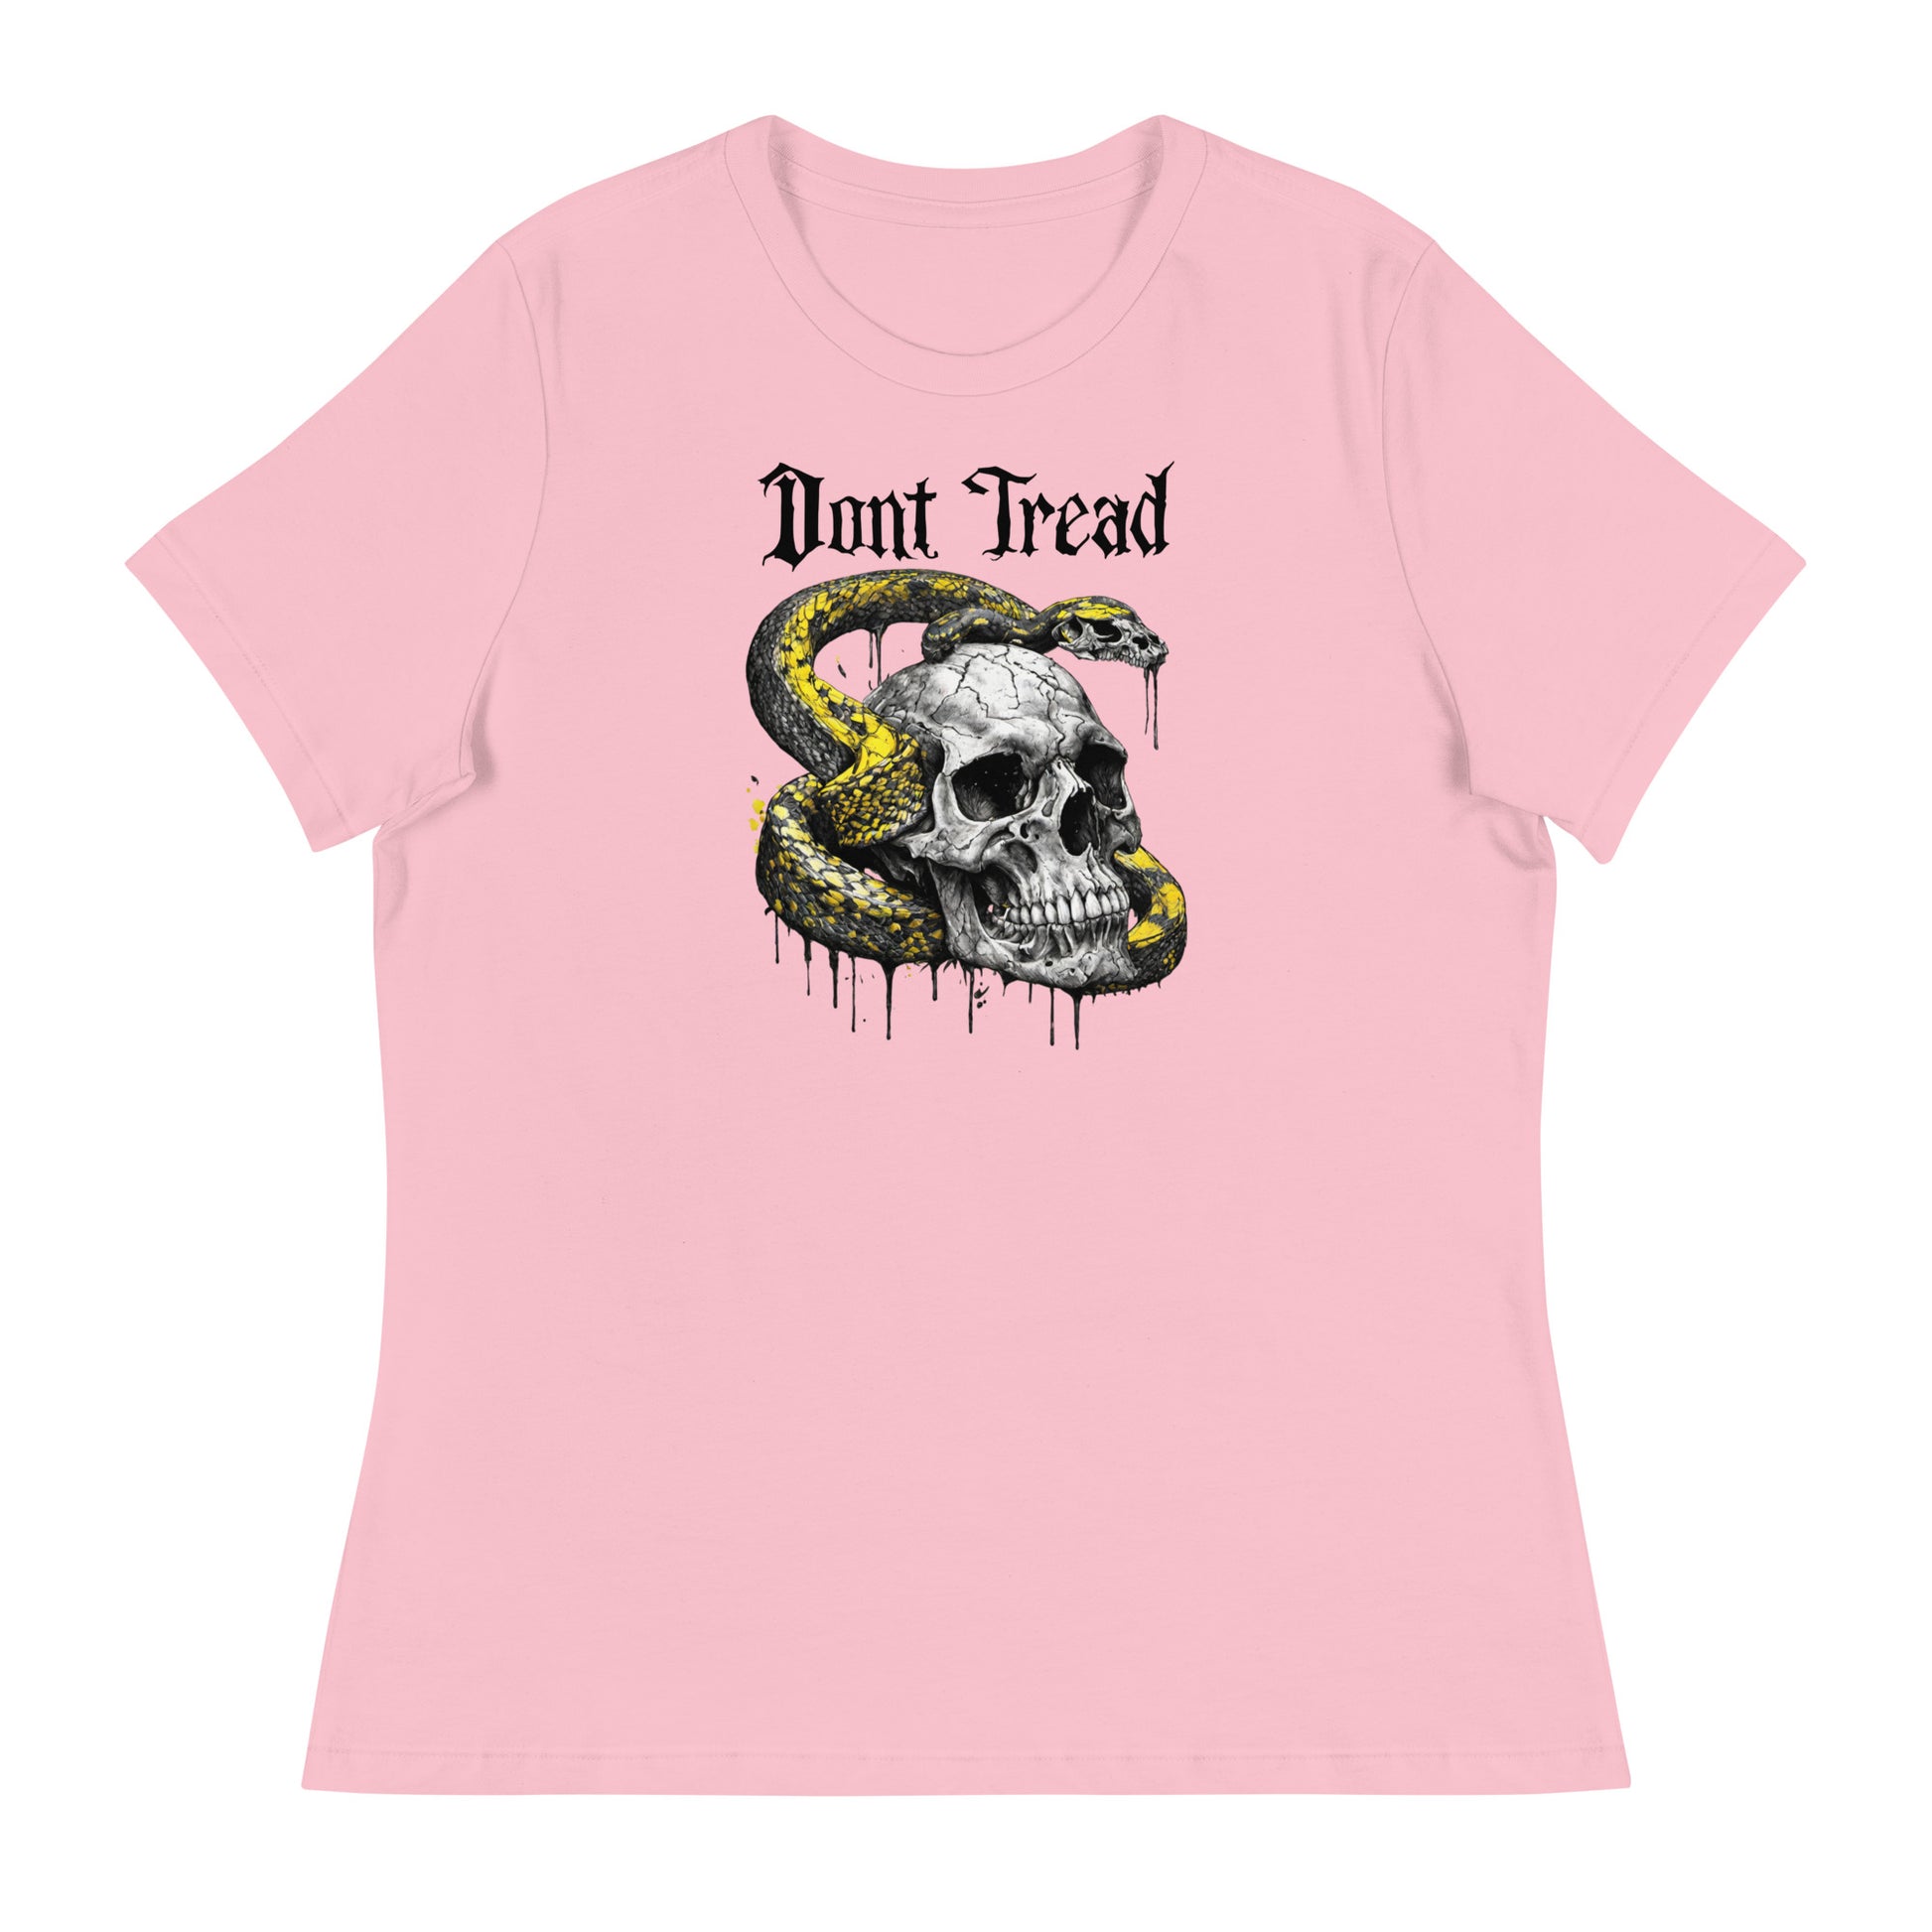 Don't Tread Snake & Skull 2nd Amendment Women's T-Shirt Pink